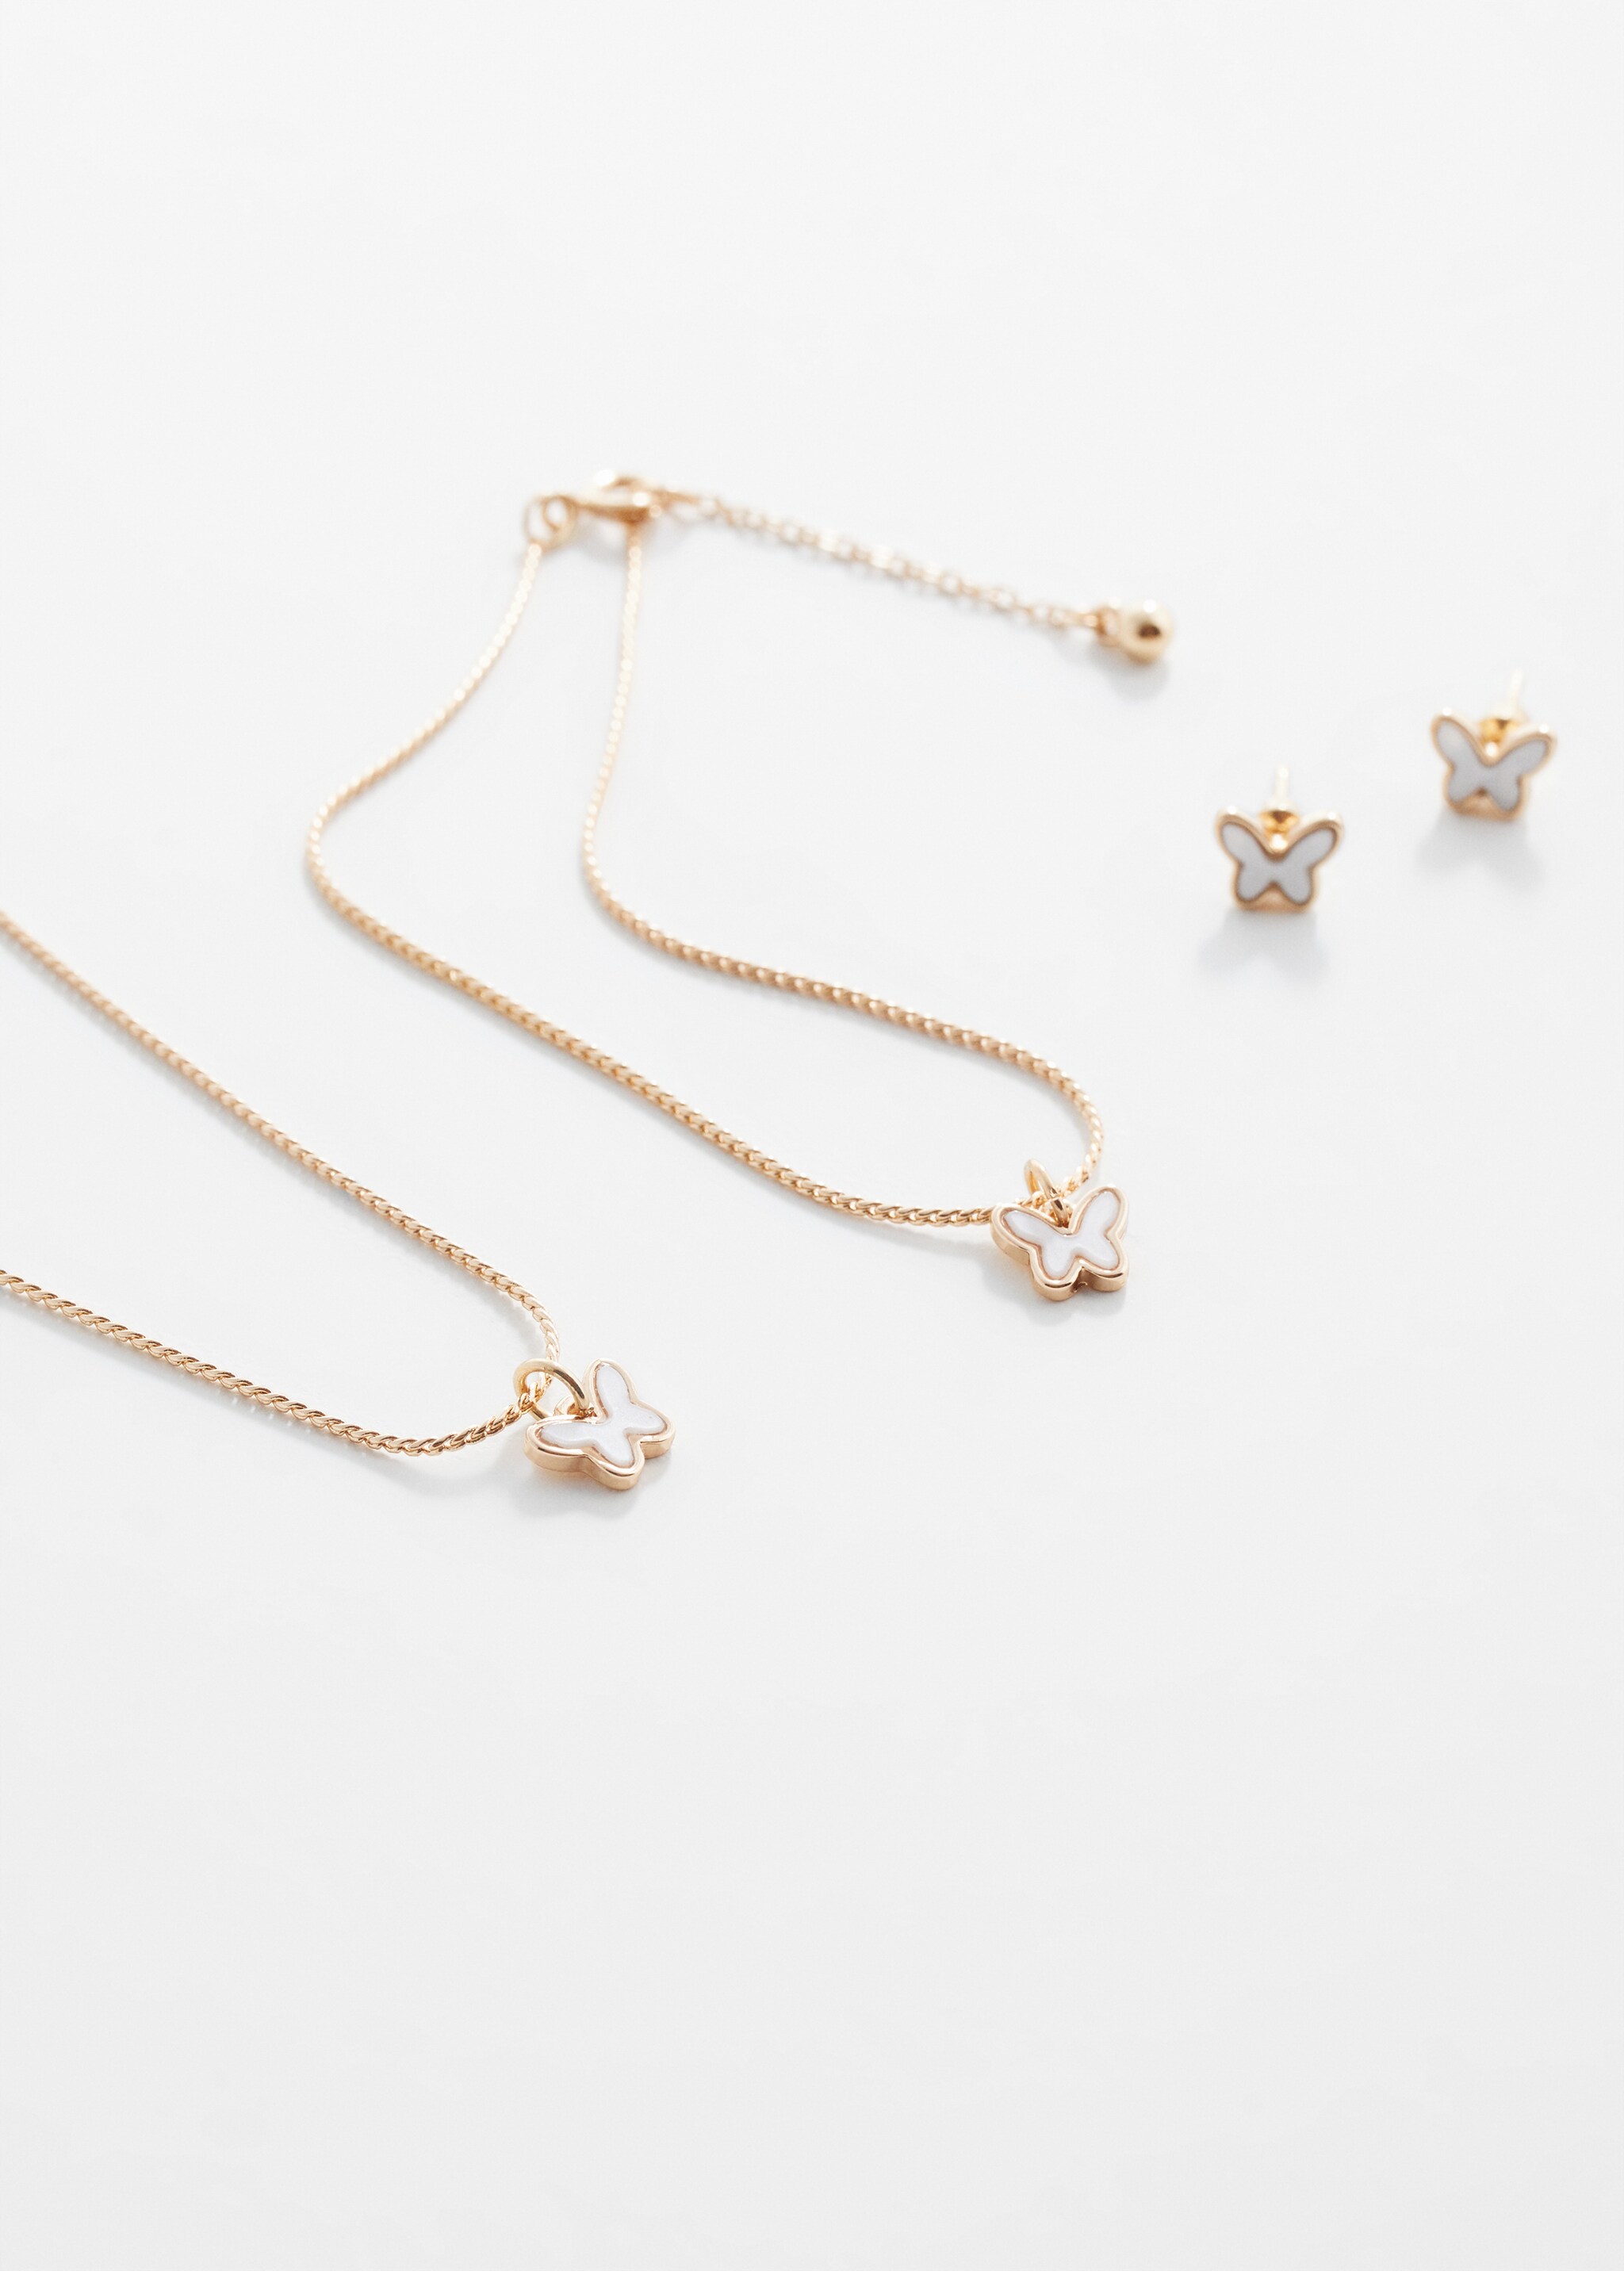 Set of necklace, bracelet and earrings - Medium plane